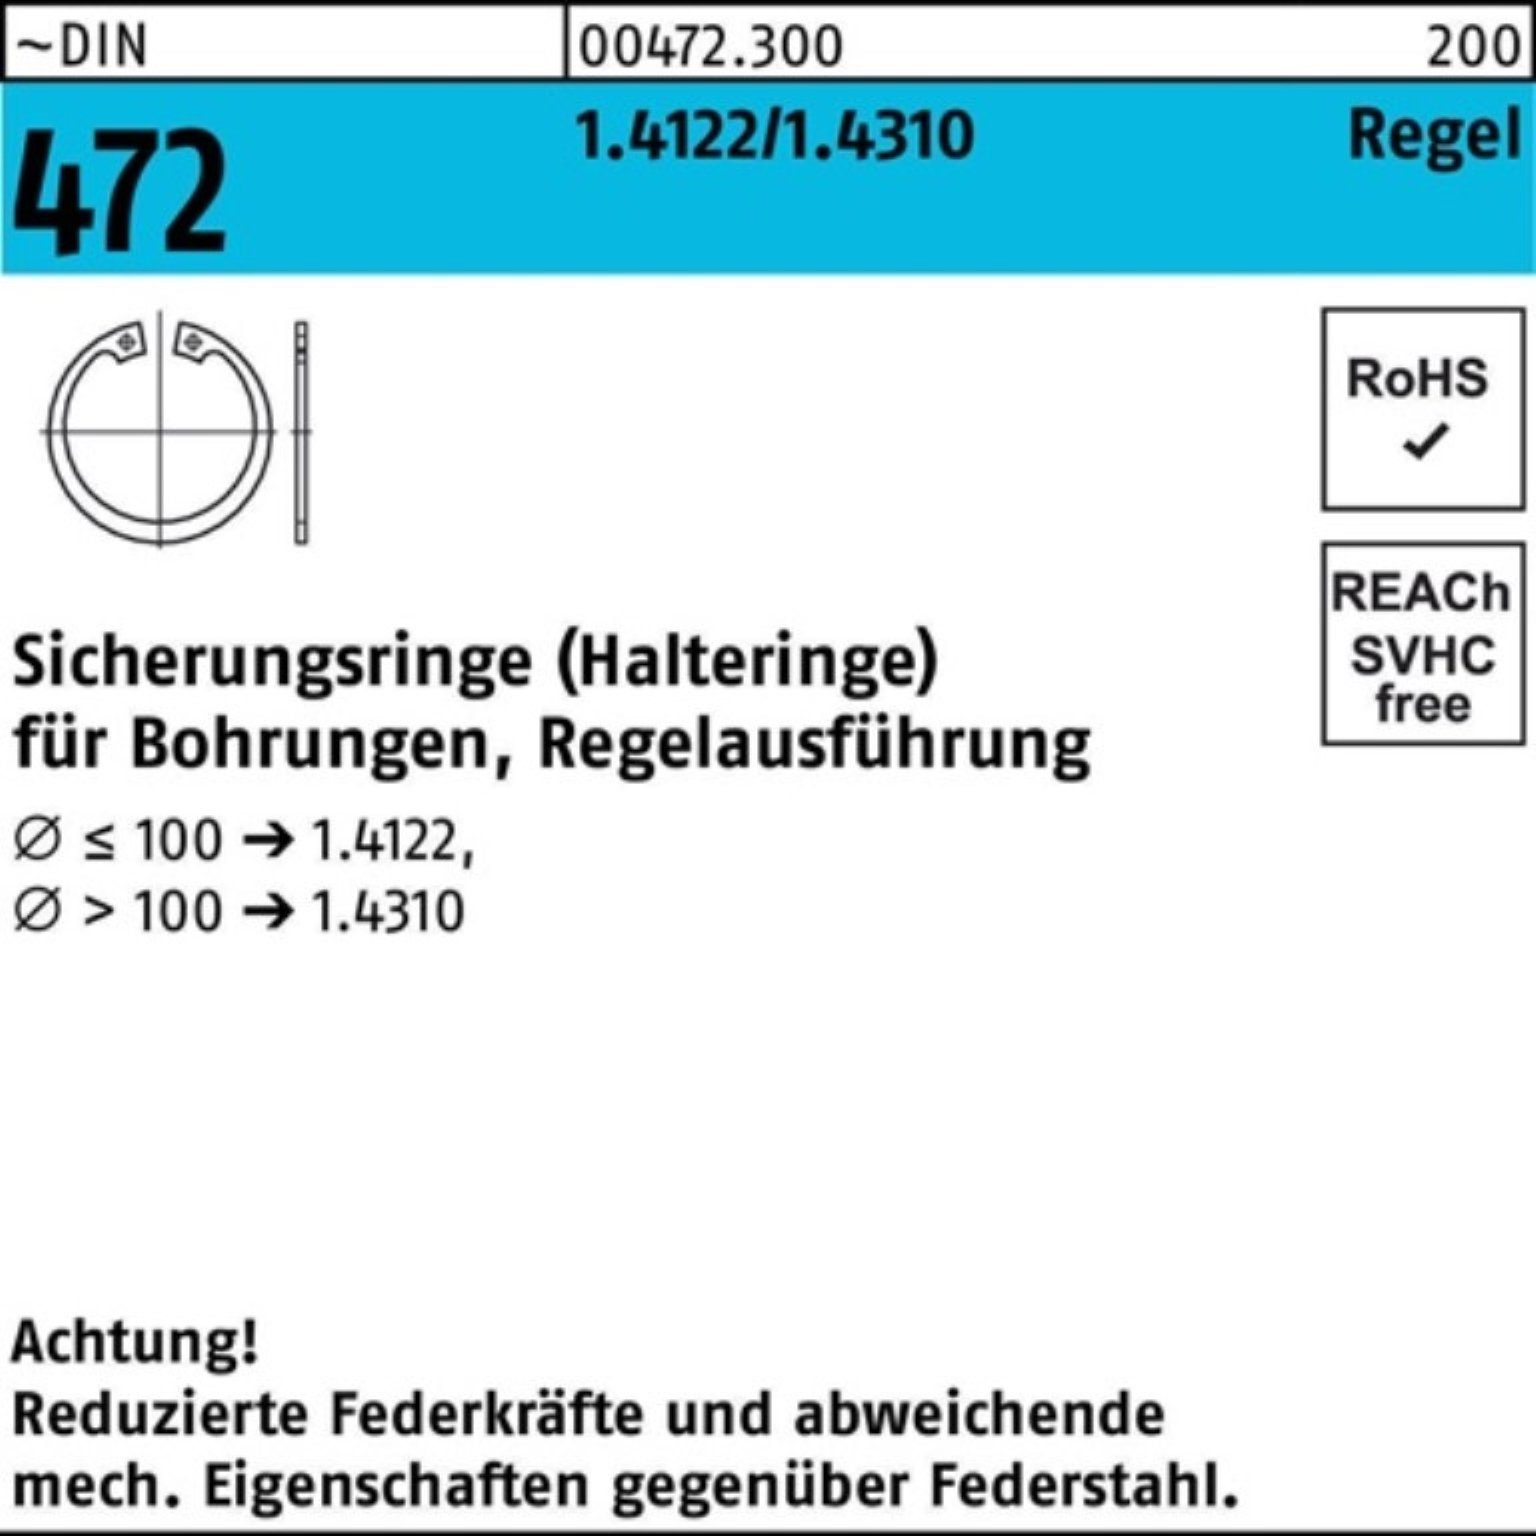 Reyher 472 Sicherungsring 2 ~DI 62x 1.4122 Stück Sicherungsring Pack DIN 100er Regelausf. 1